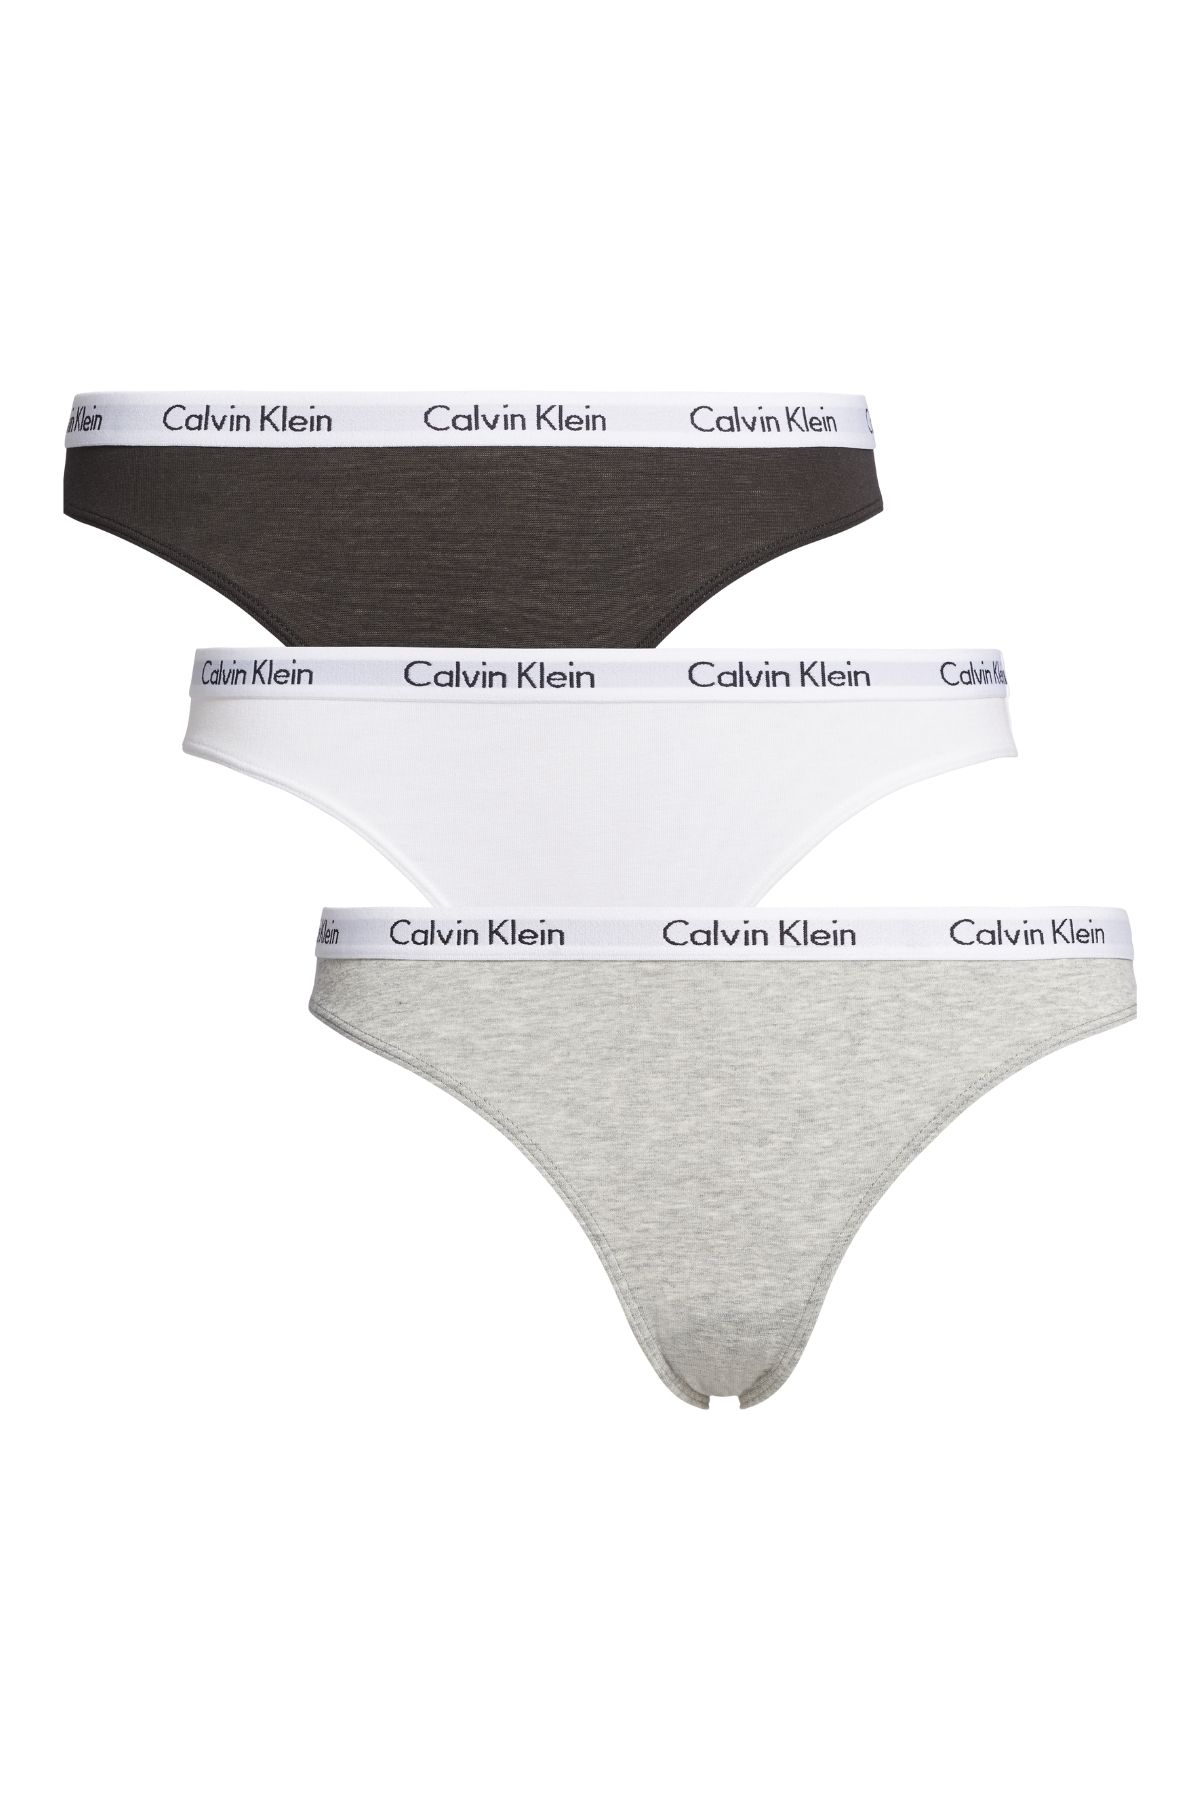 Calvin Klein Kadın Imzalı Elastik Bantlı Gri Külot 000qd3588e999-gri